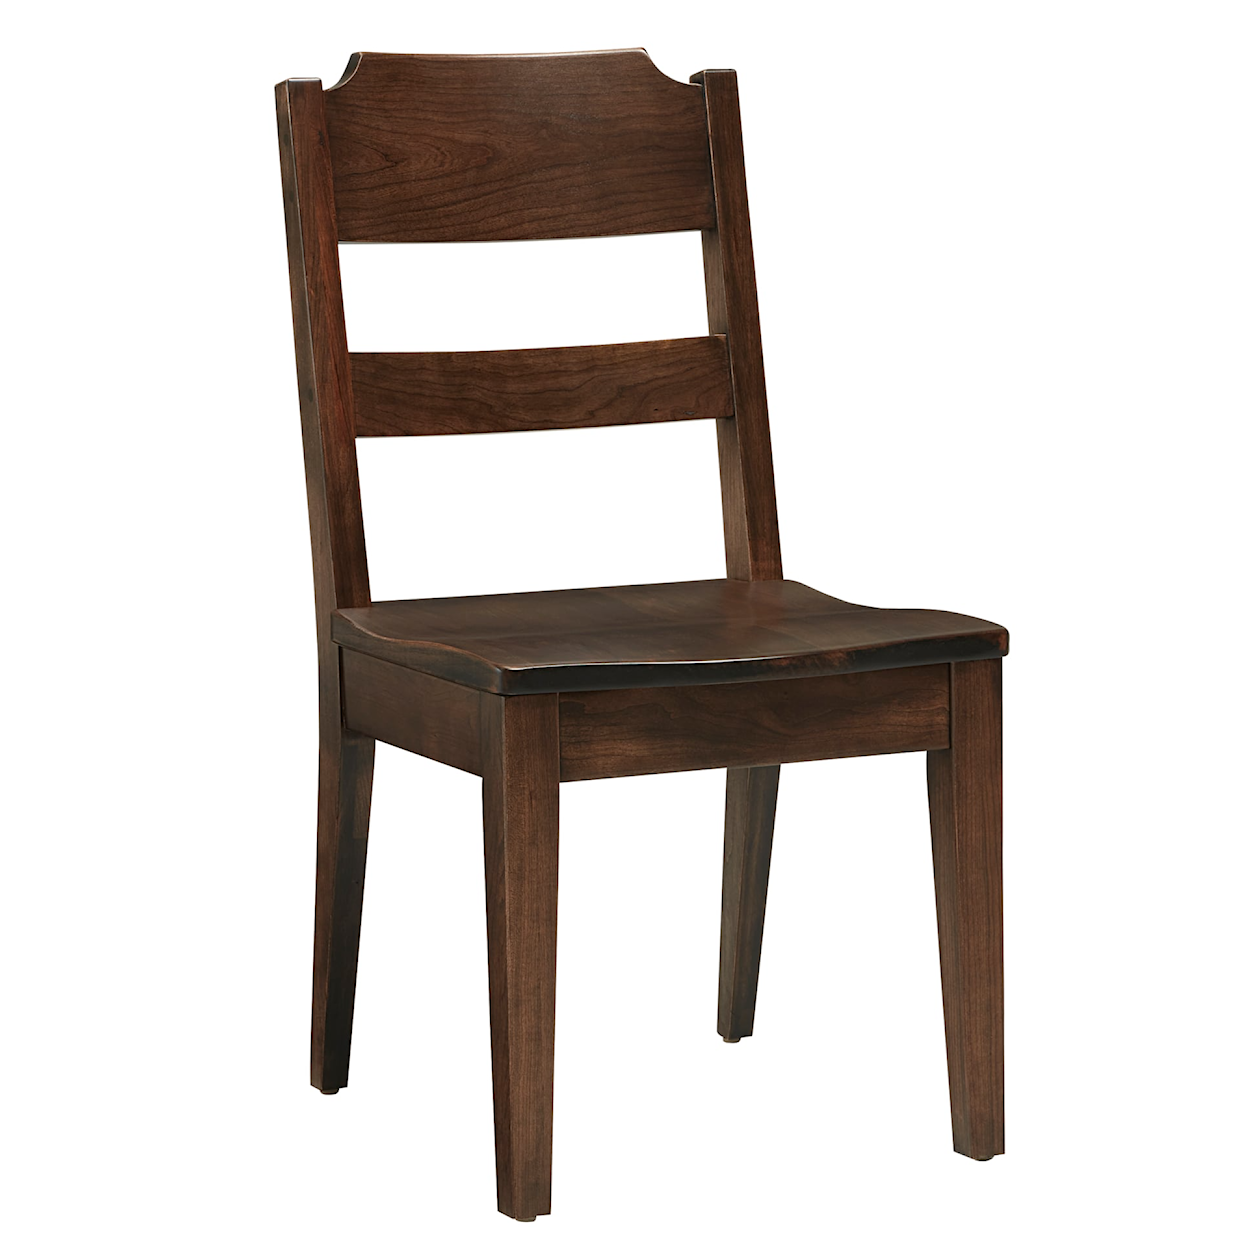 Vaughan Bassett Crafted Cherry - Dark Ladderback Side Chair